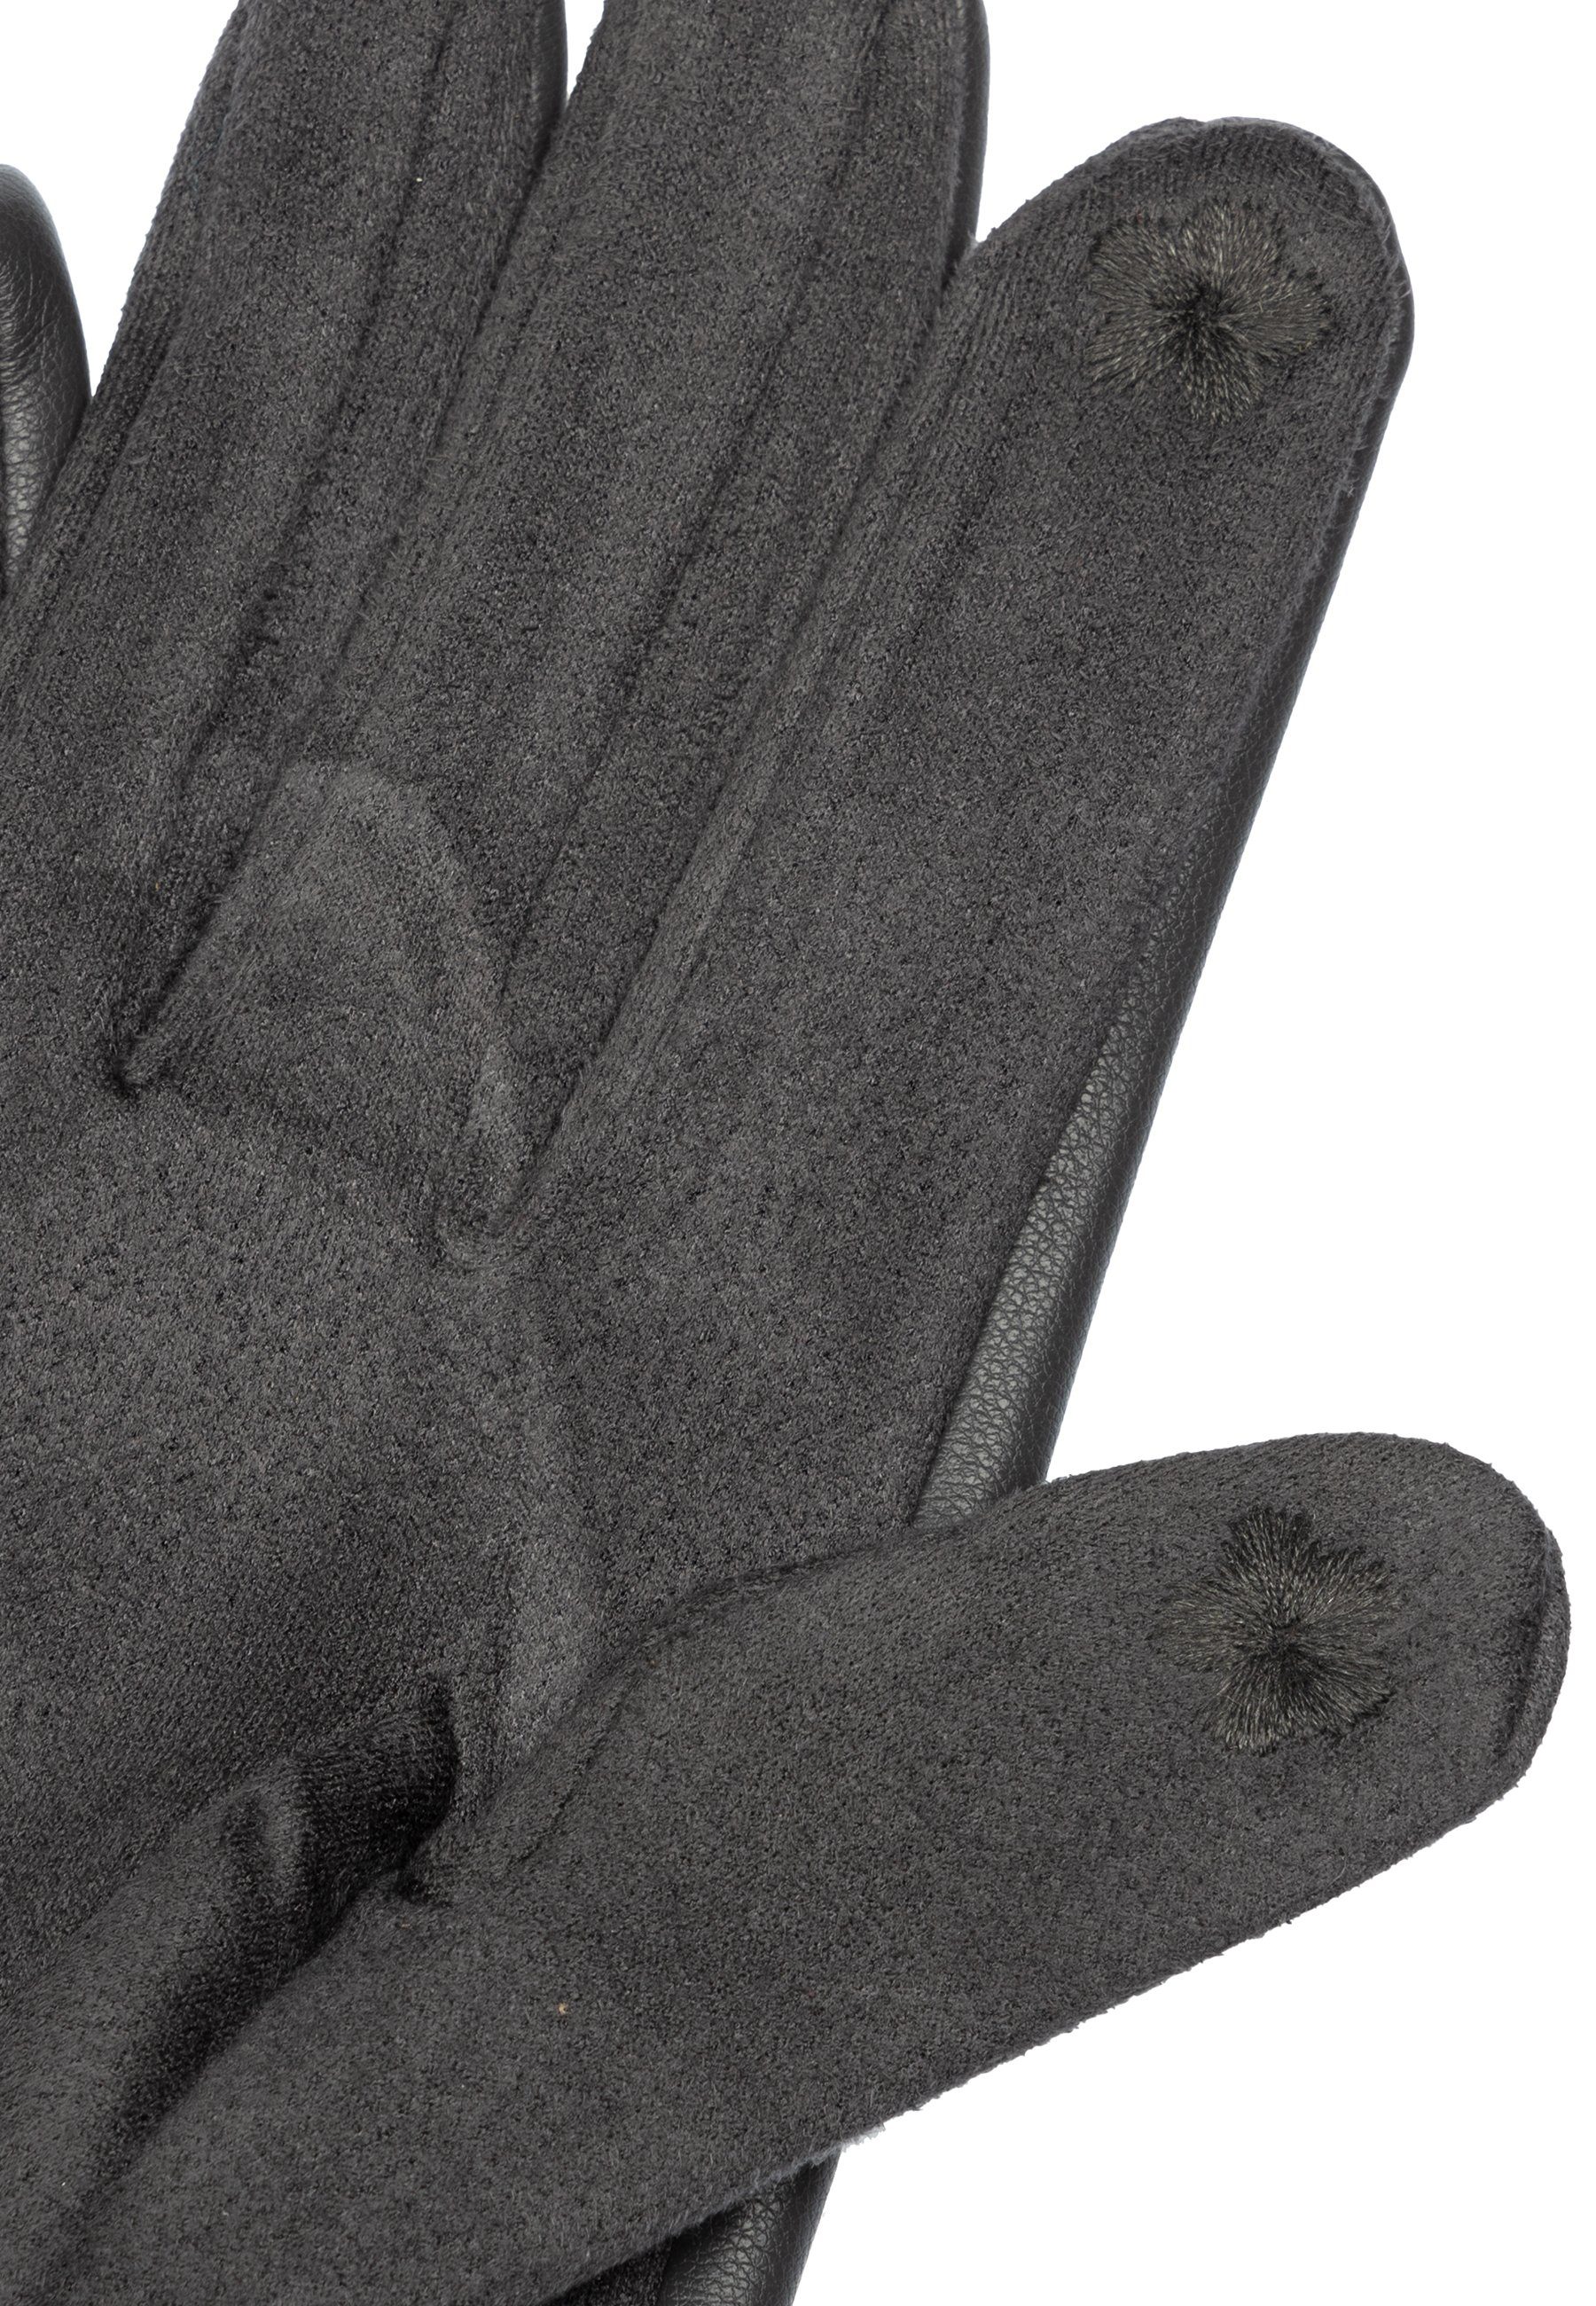 Strickhandschuhe klassisch dunkelgrau Dekor elegante Caspar Handschuhe uni Damen mit GLV017 Fell